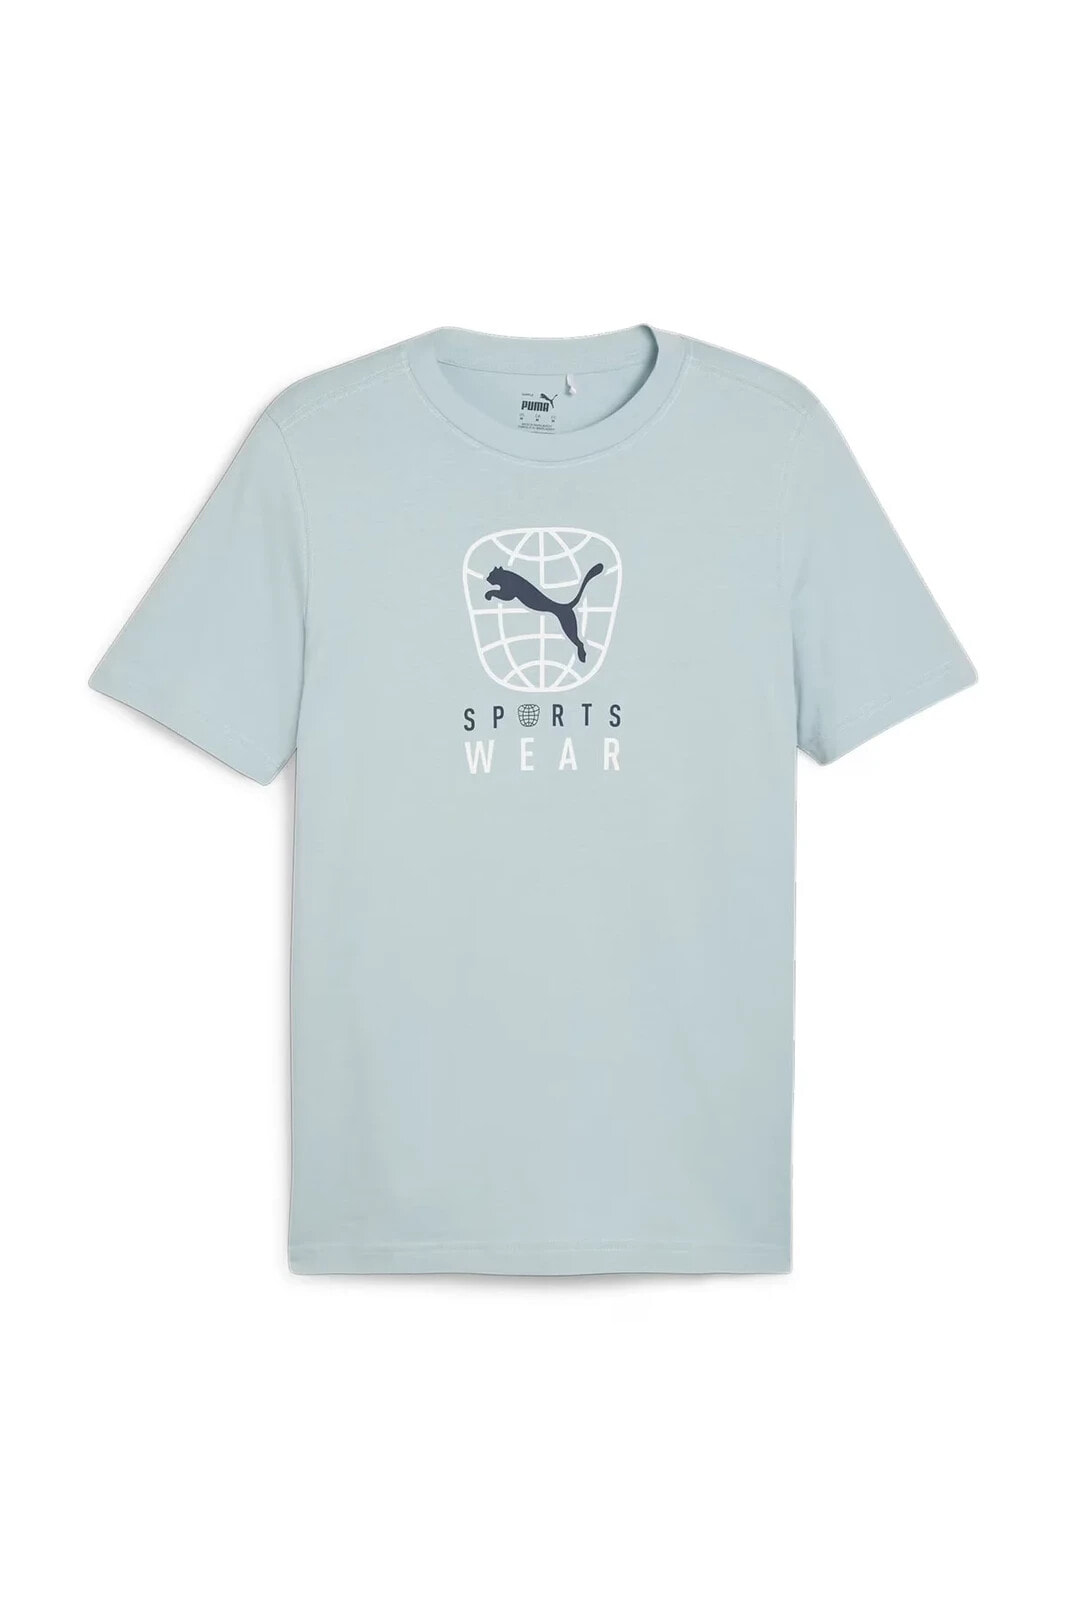 Better Sportswear Erkek Mavi Günlük Stil T-Shirt 67900122